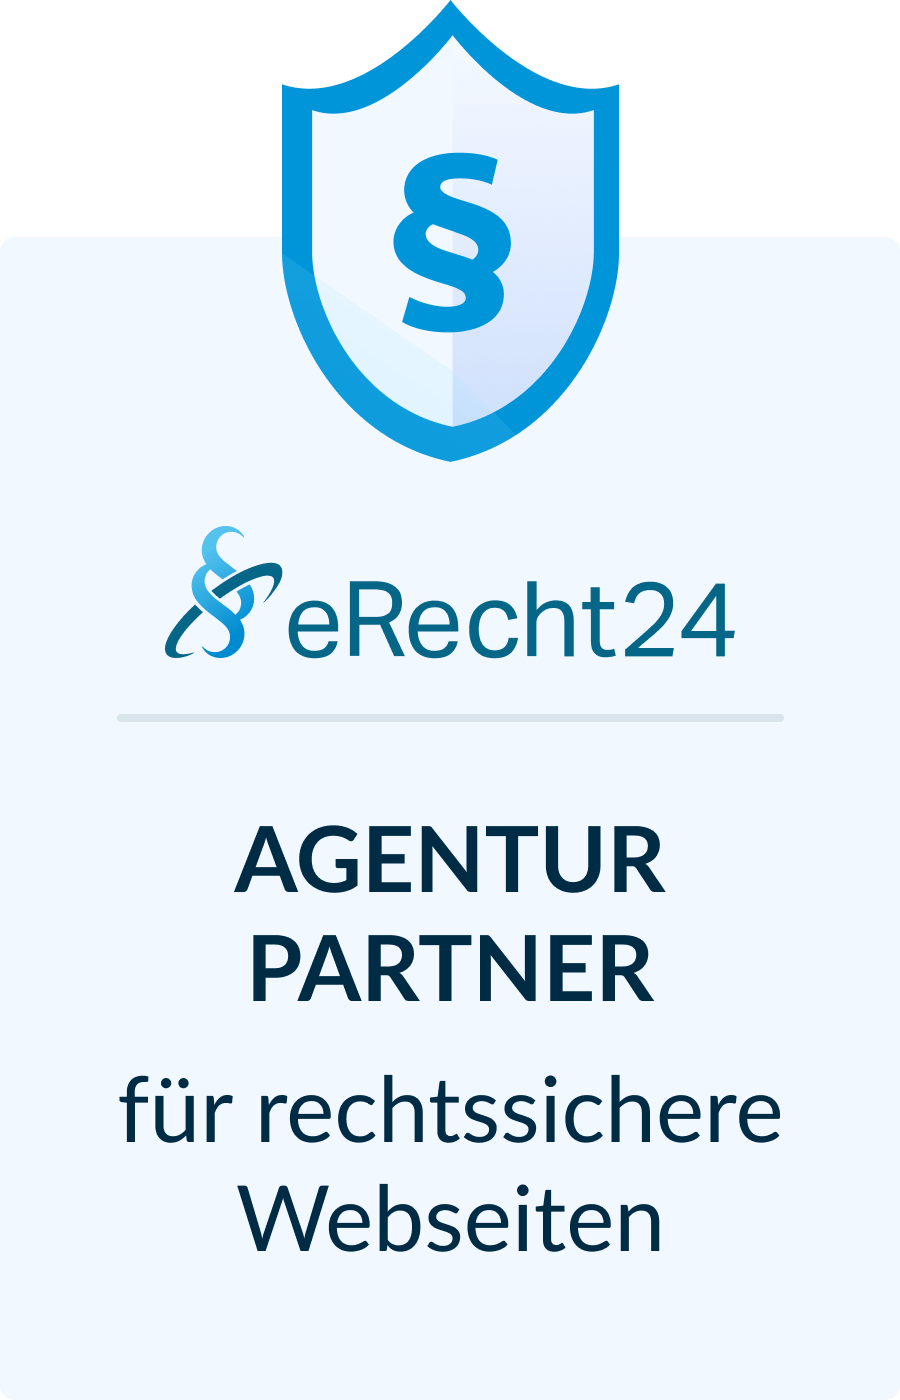 Lars Becker Webdesign ist eRecht24 Agenturpartner